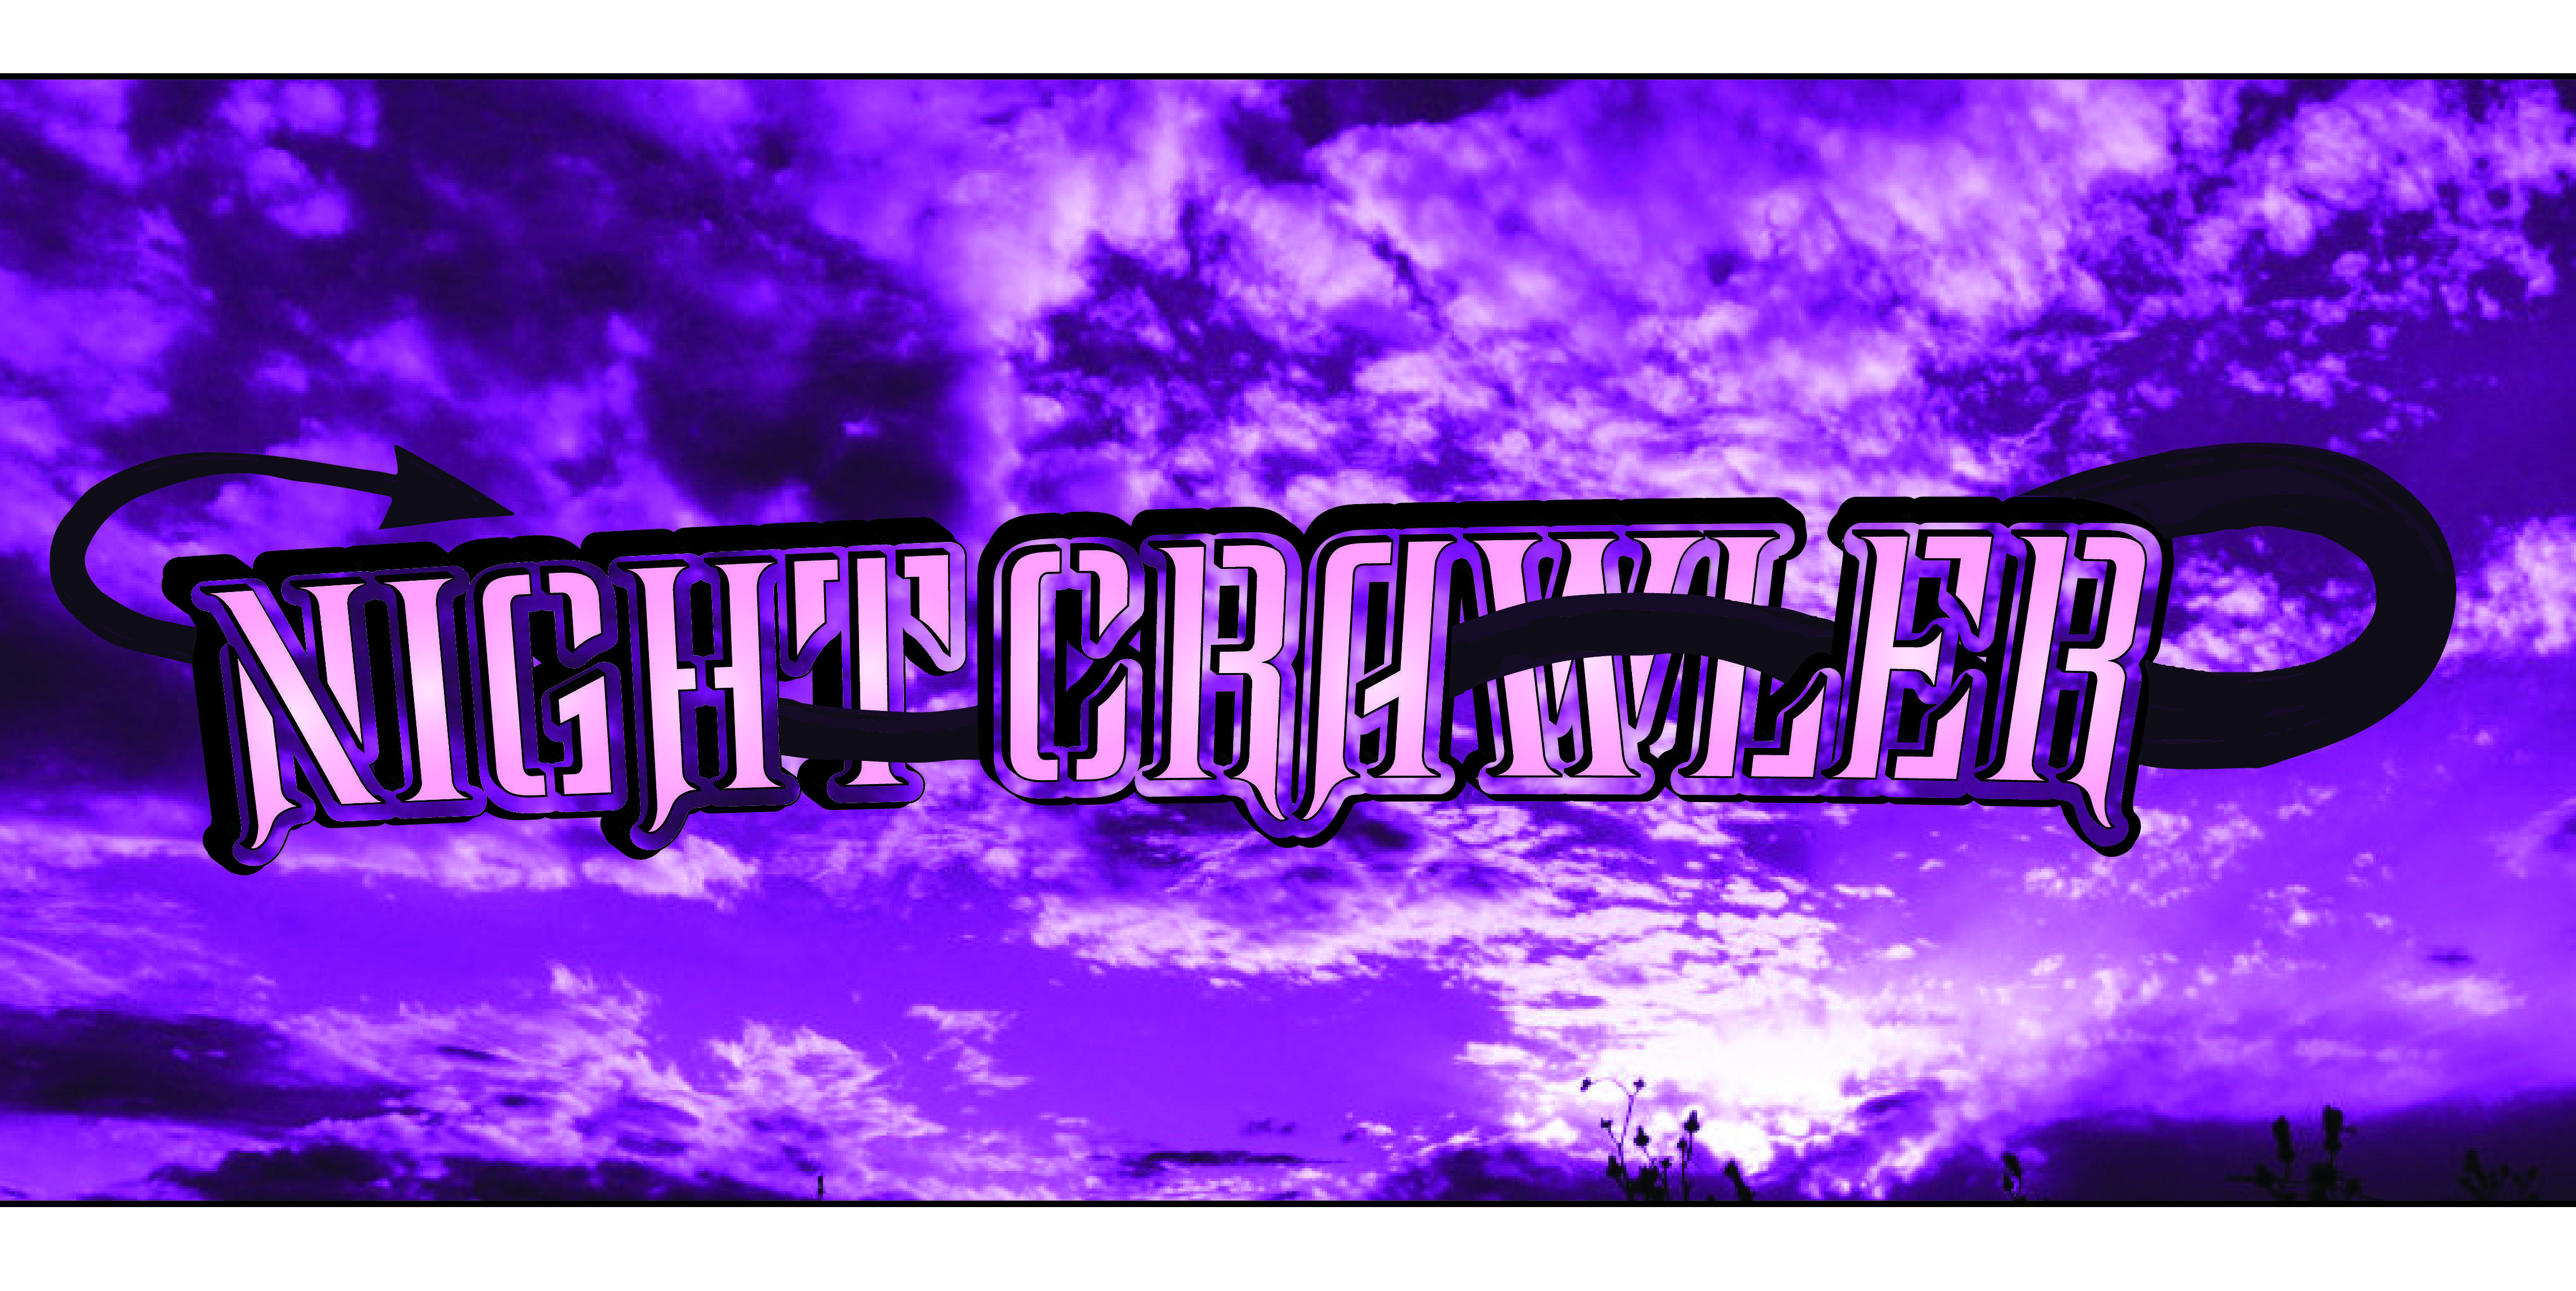 Nightcrawler Logo - Logo Creation for Nightcrawler - Graphics Design Media